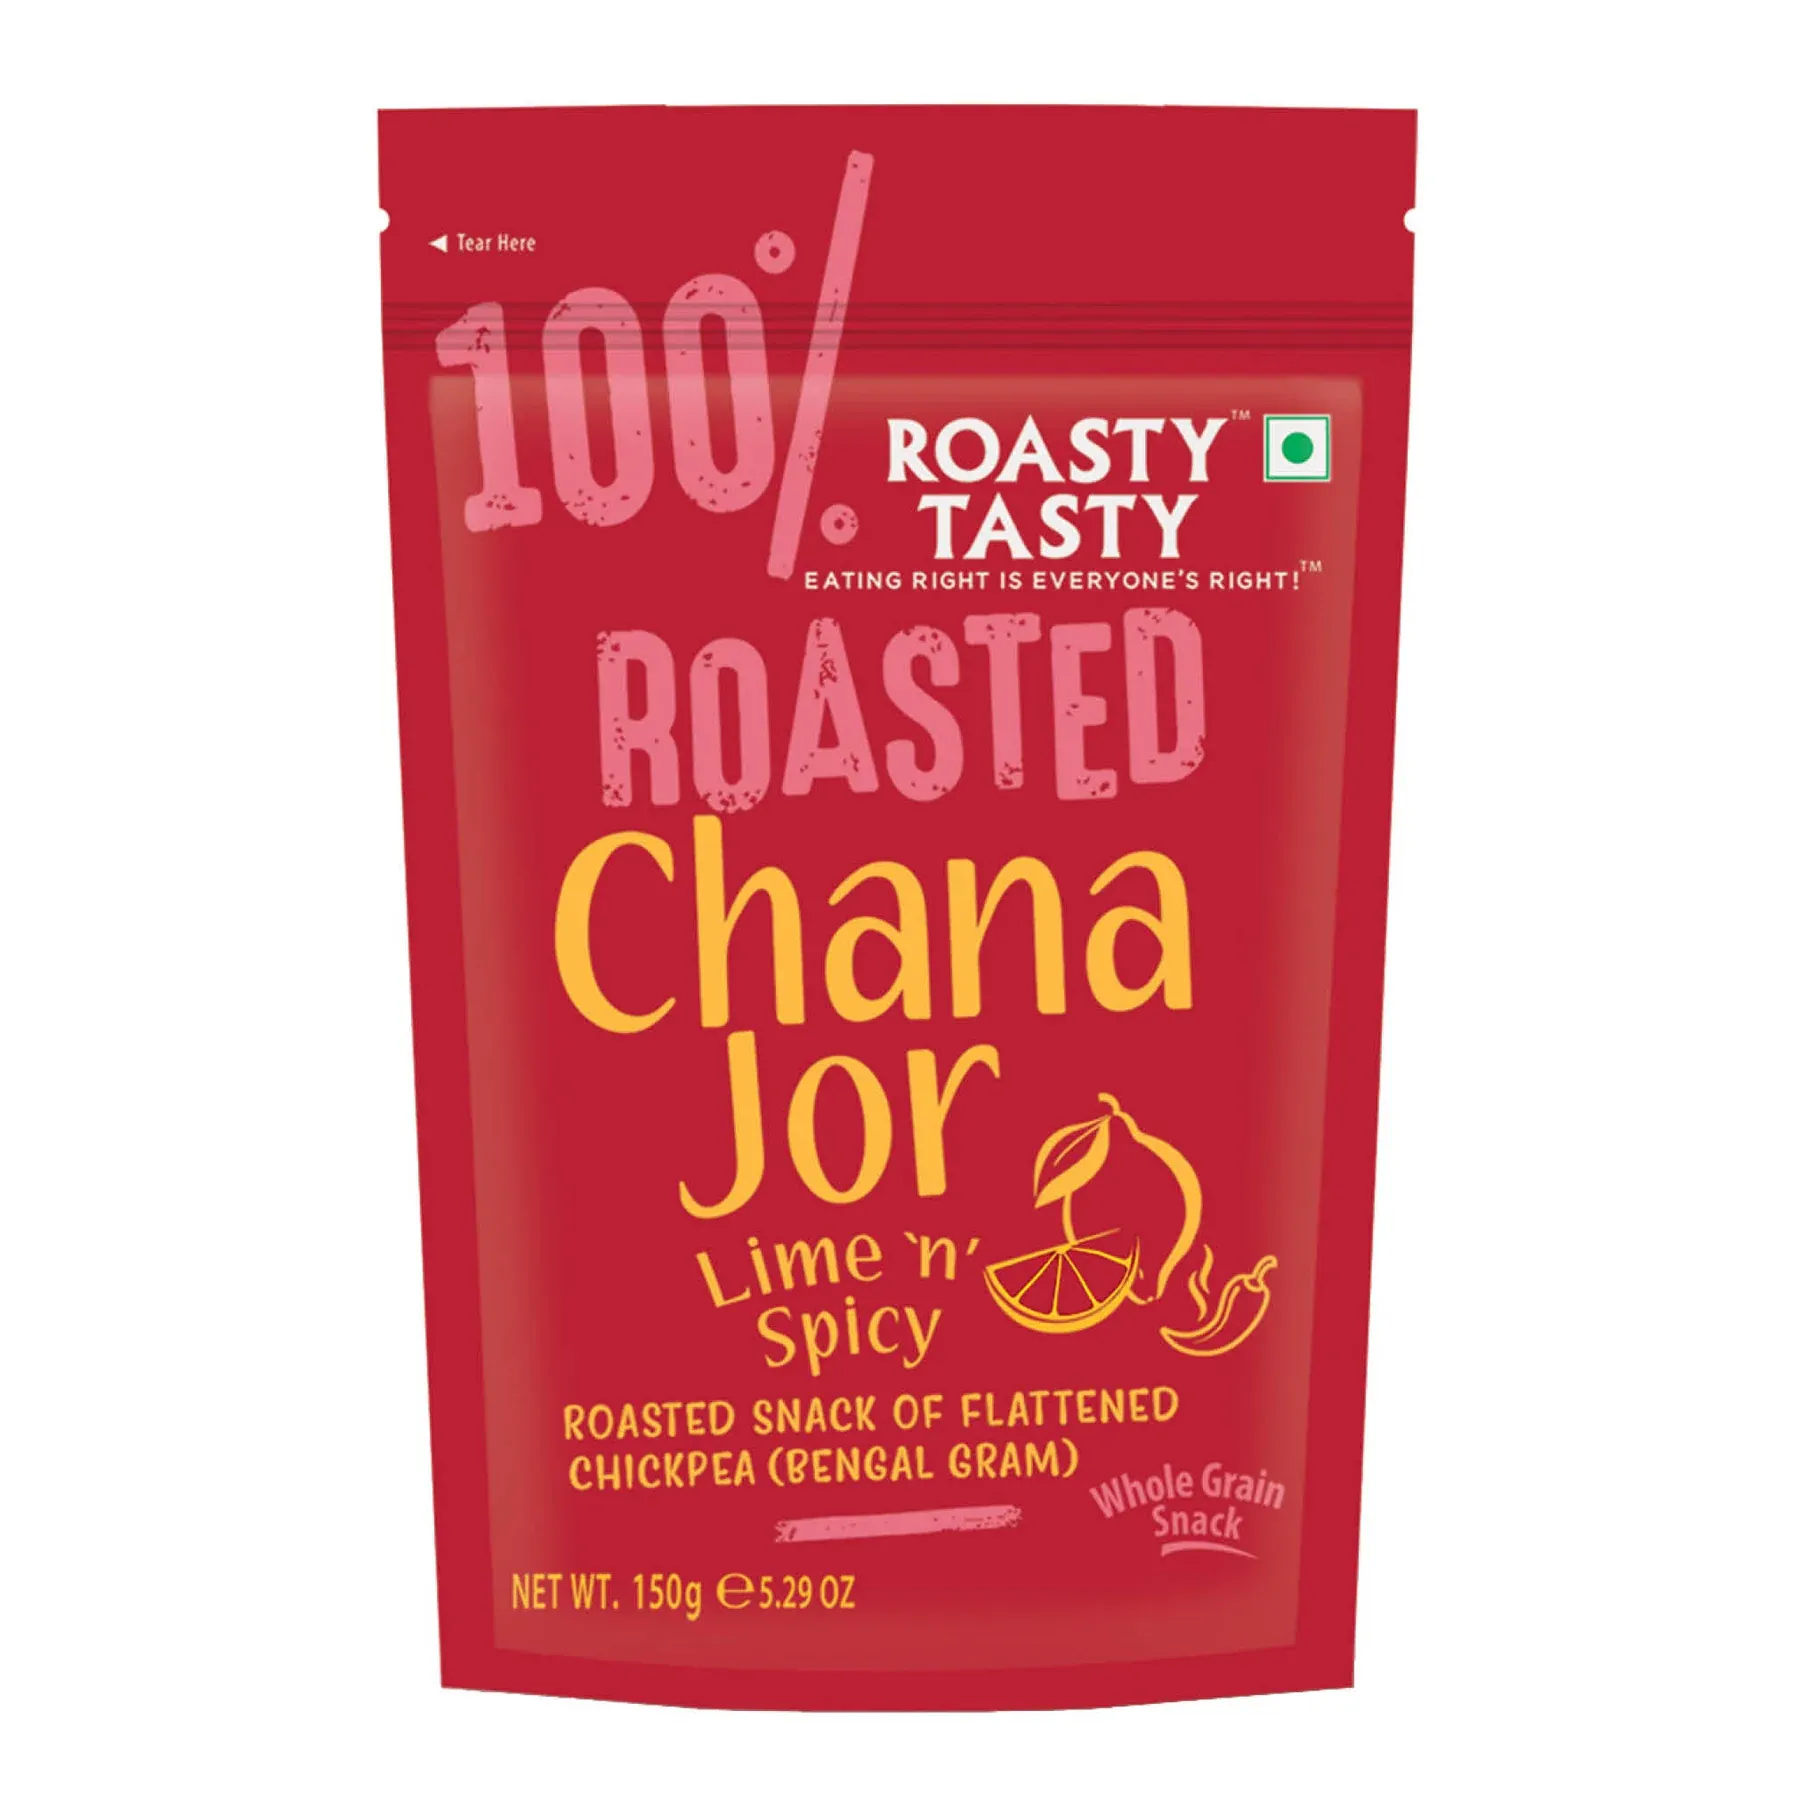 Roasty Tasty Roasted Chana Jor Lime 'n' Spicy  Image